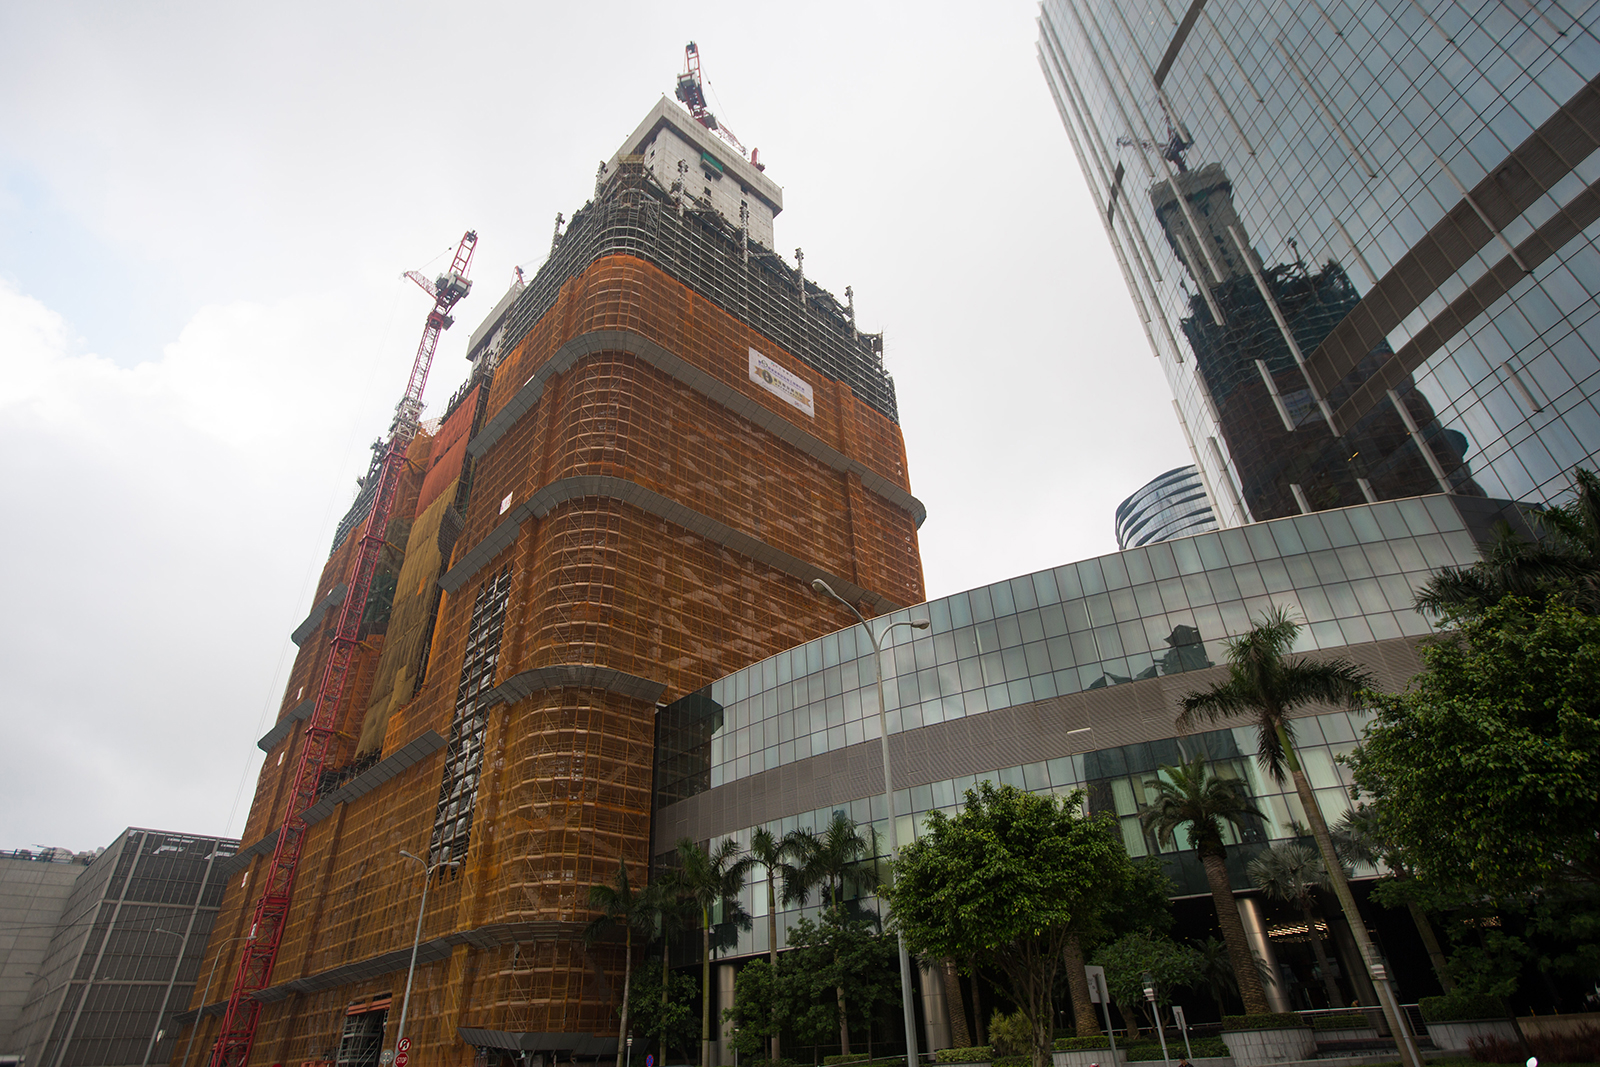 14 hotels under construction in Macau in Q3